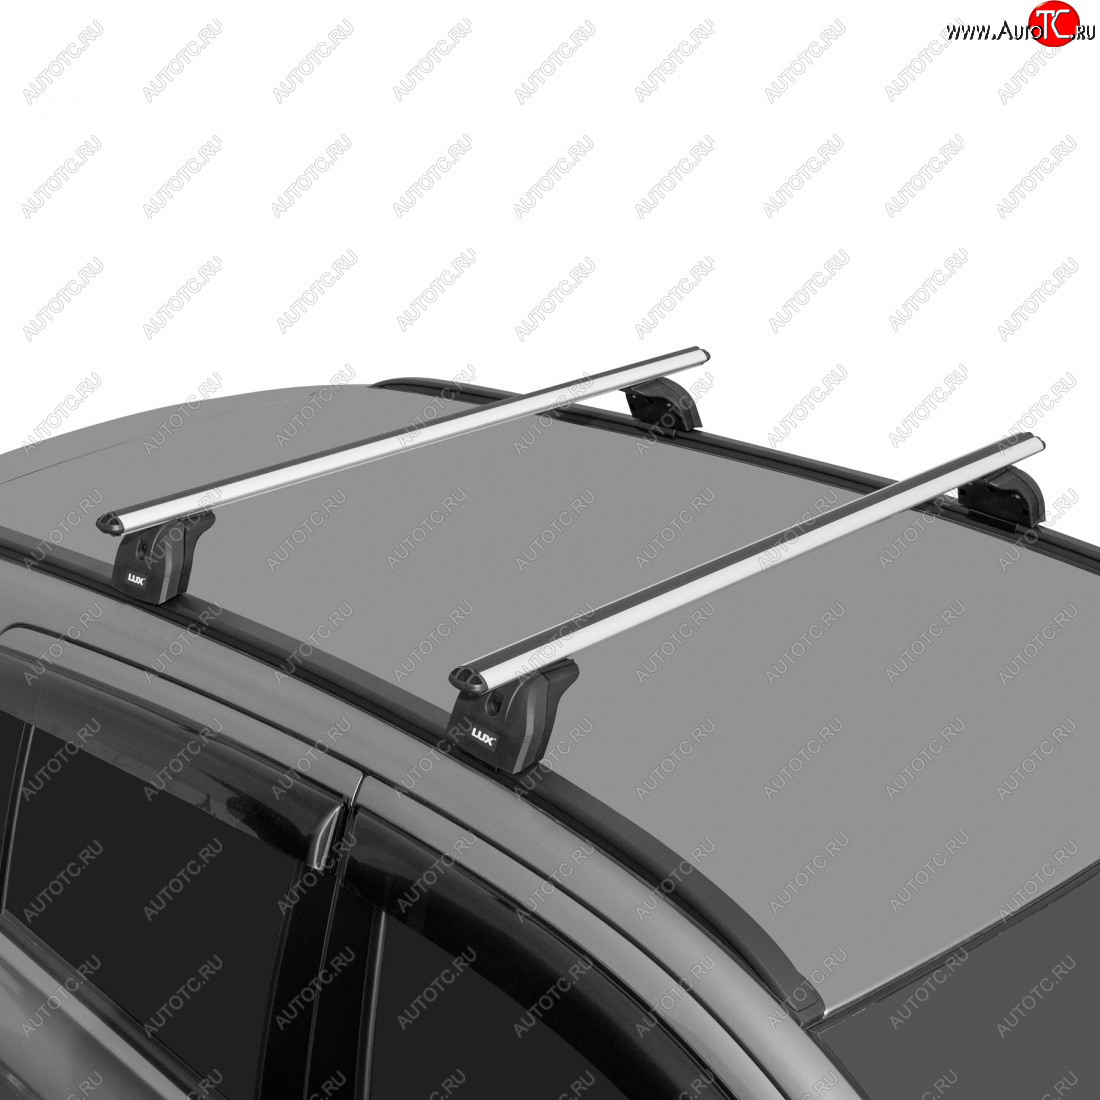 10 397 р. Багажник на крышу с низкими рейлингами сборе LUX  Volvo XC60 (2008-2017) (дуги аэро-классик 120 см, без замка, серебро)